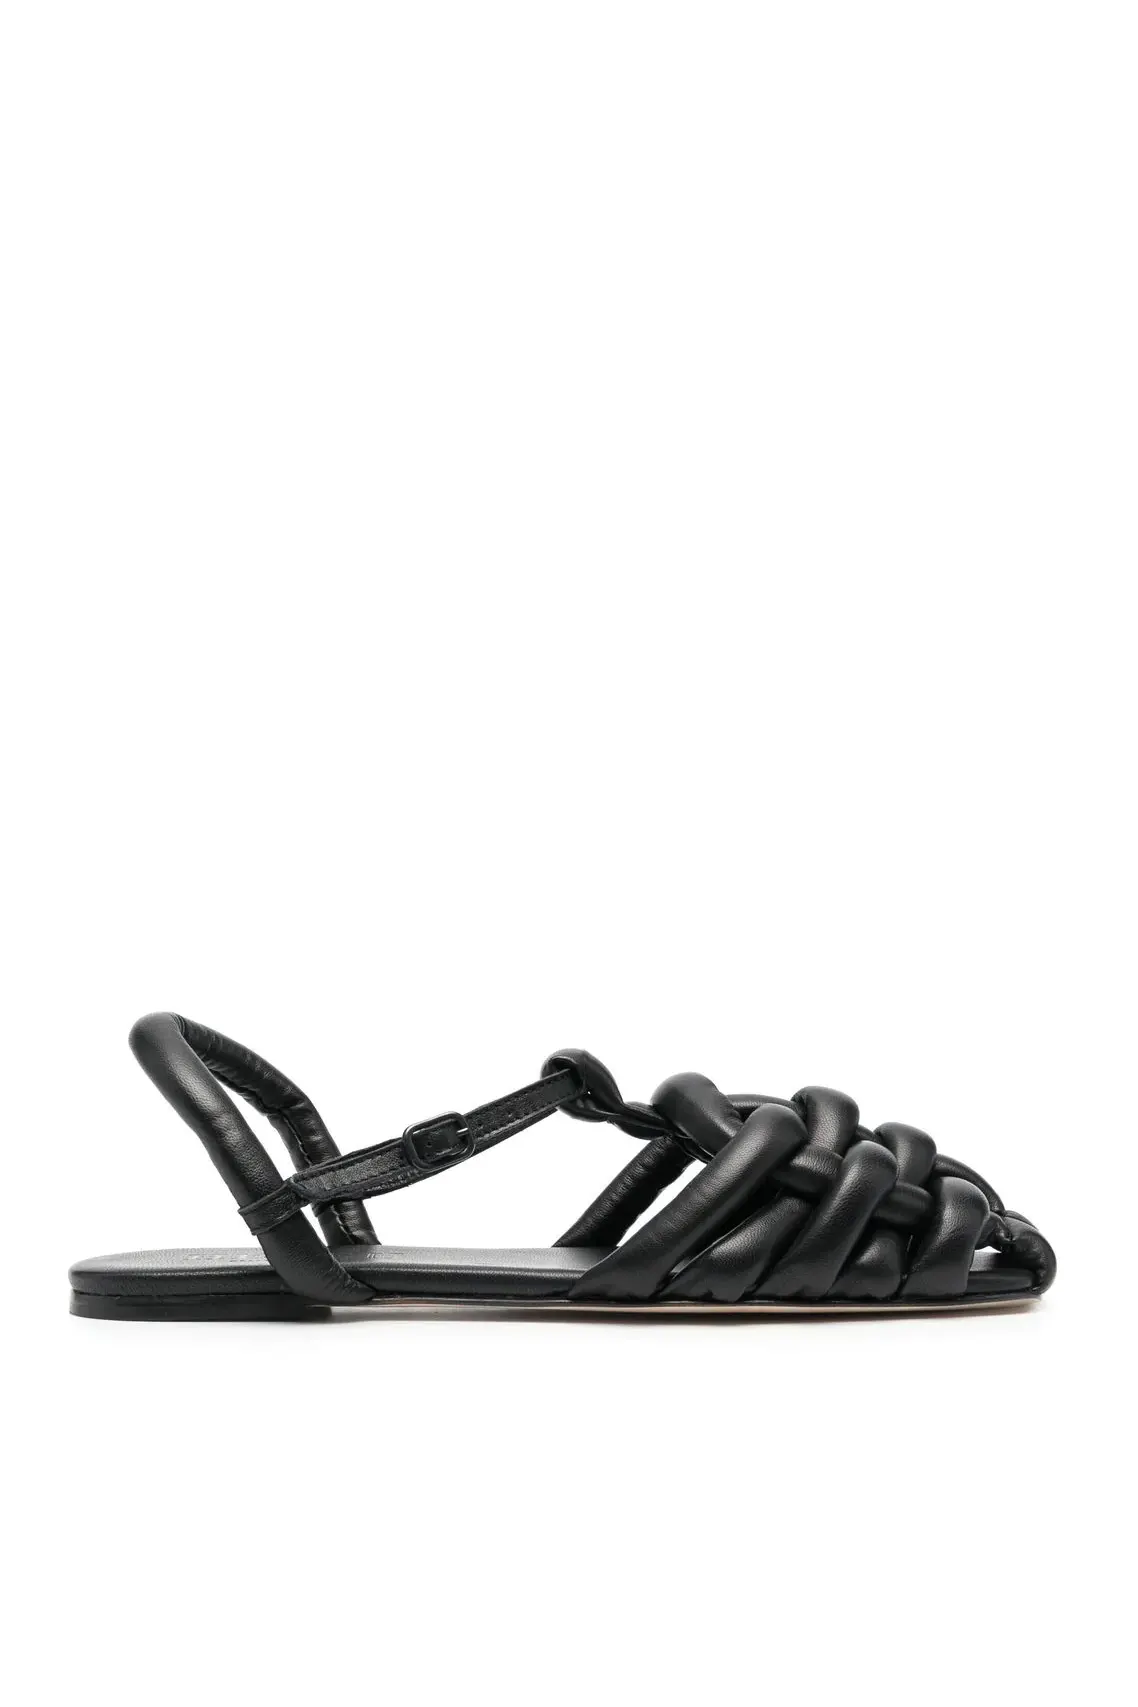 Cabersa sandals, black